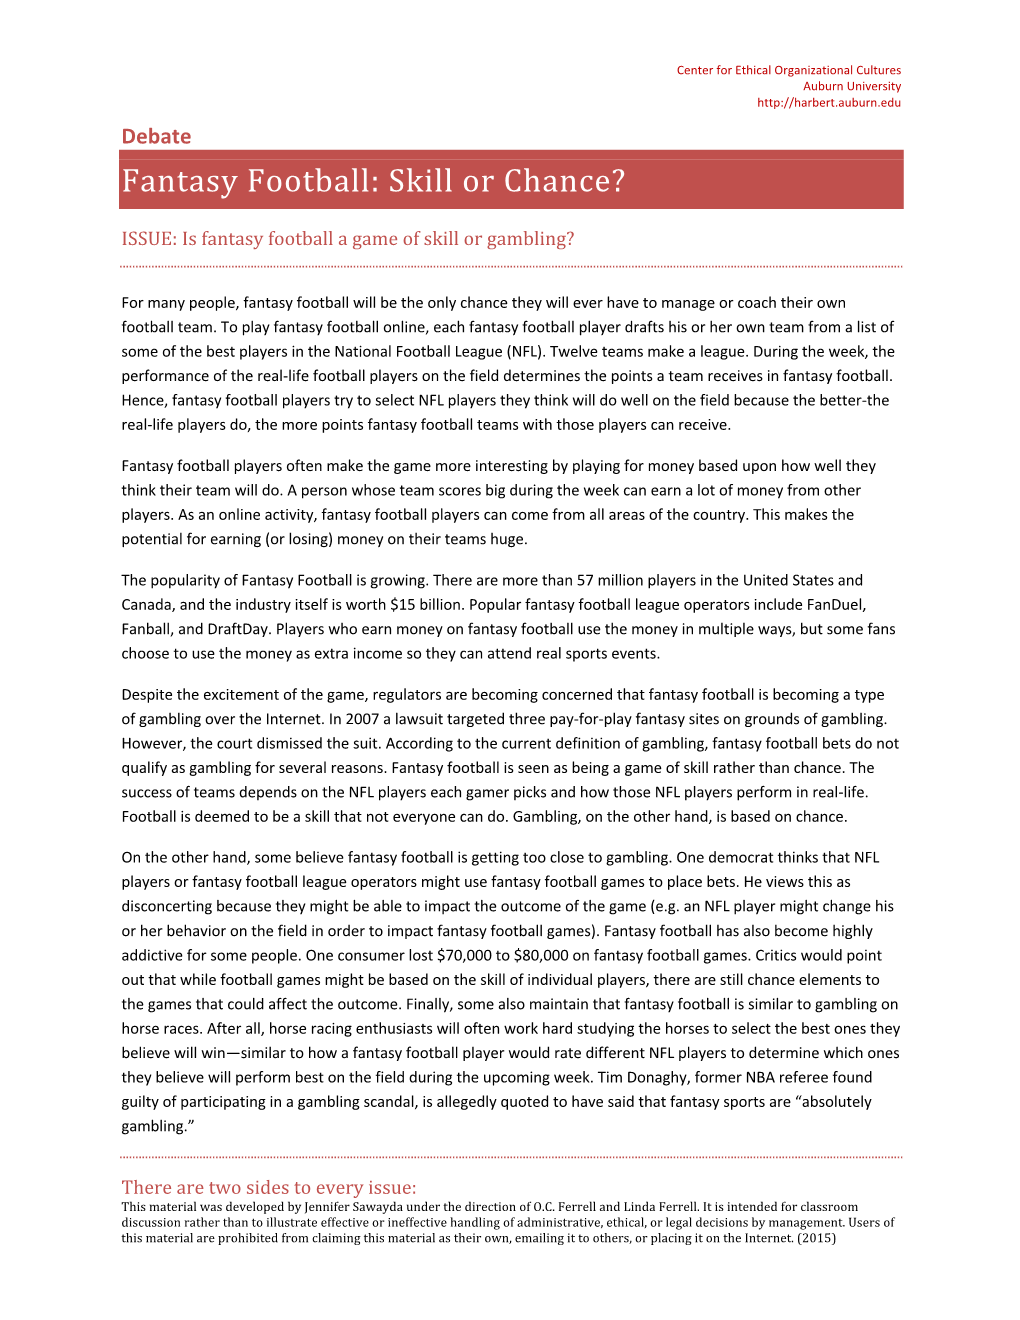 Debate Fantasy Football: Skill Or Chance?